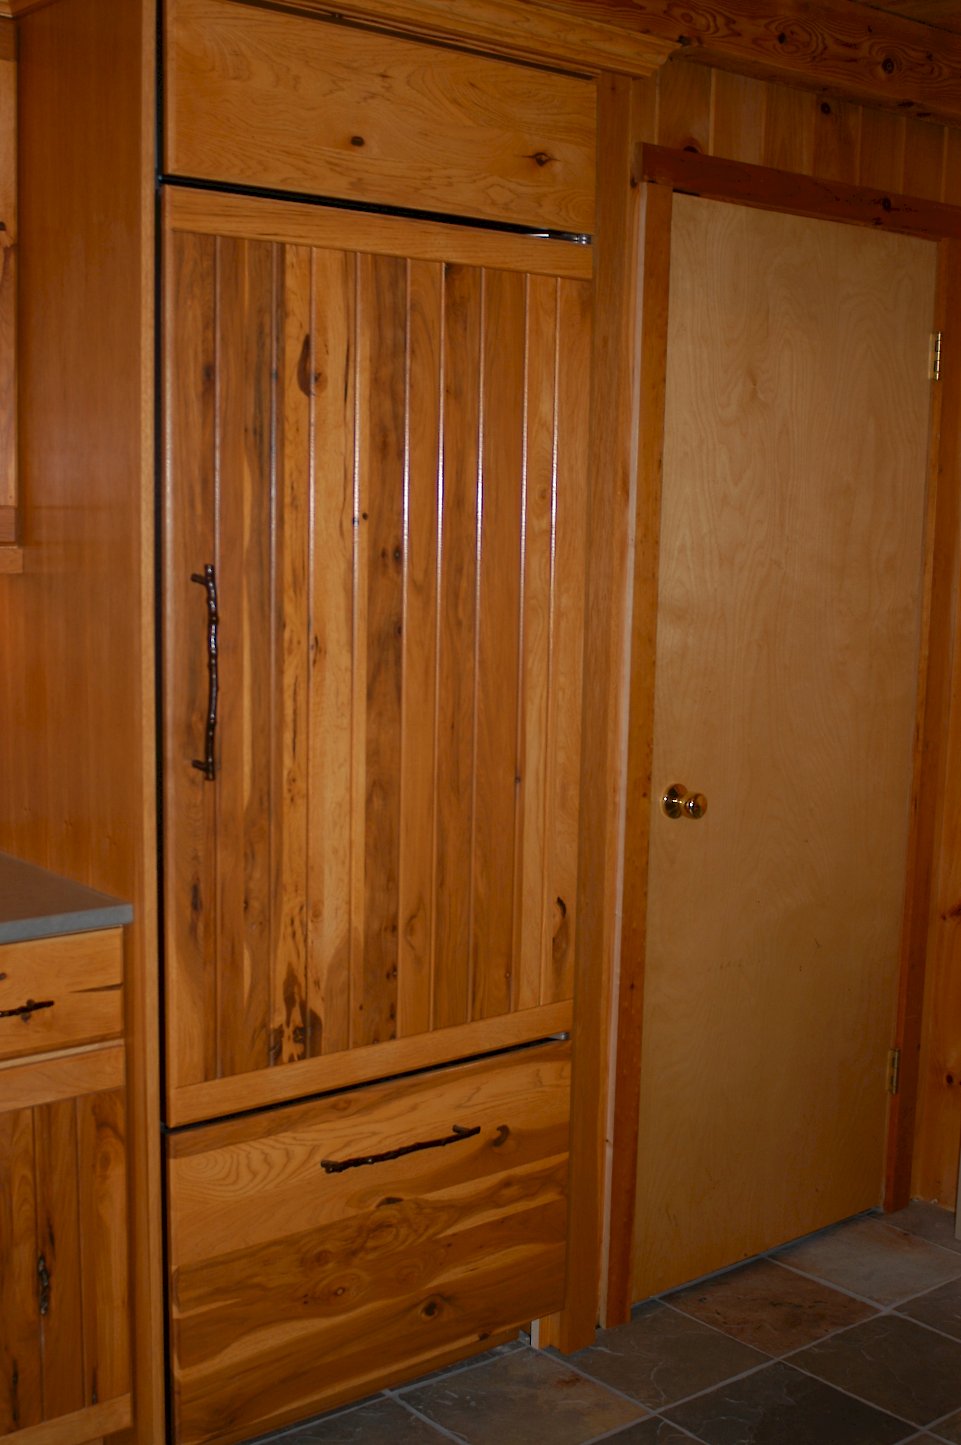 Custom hickory panels on the refrigerator.